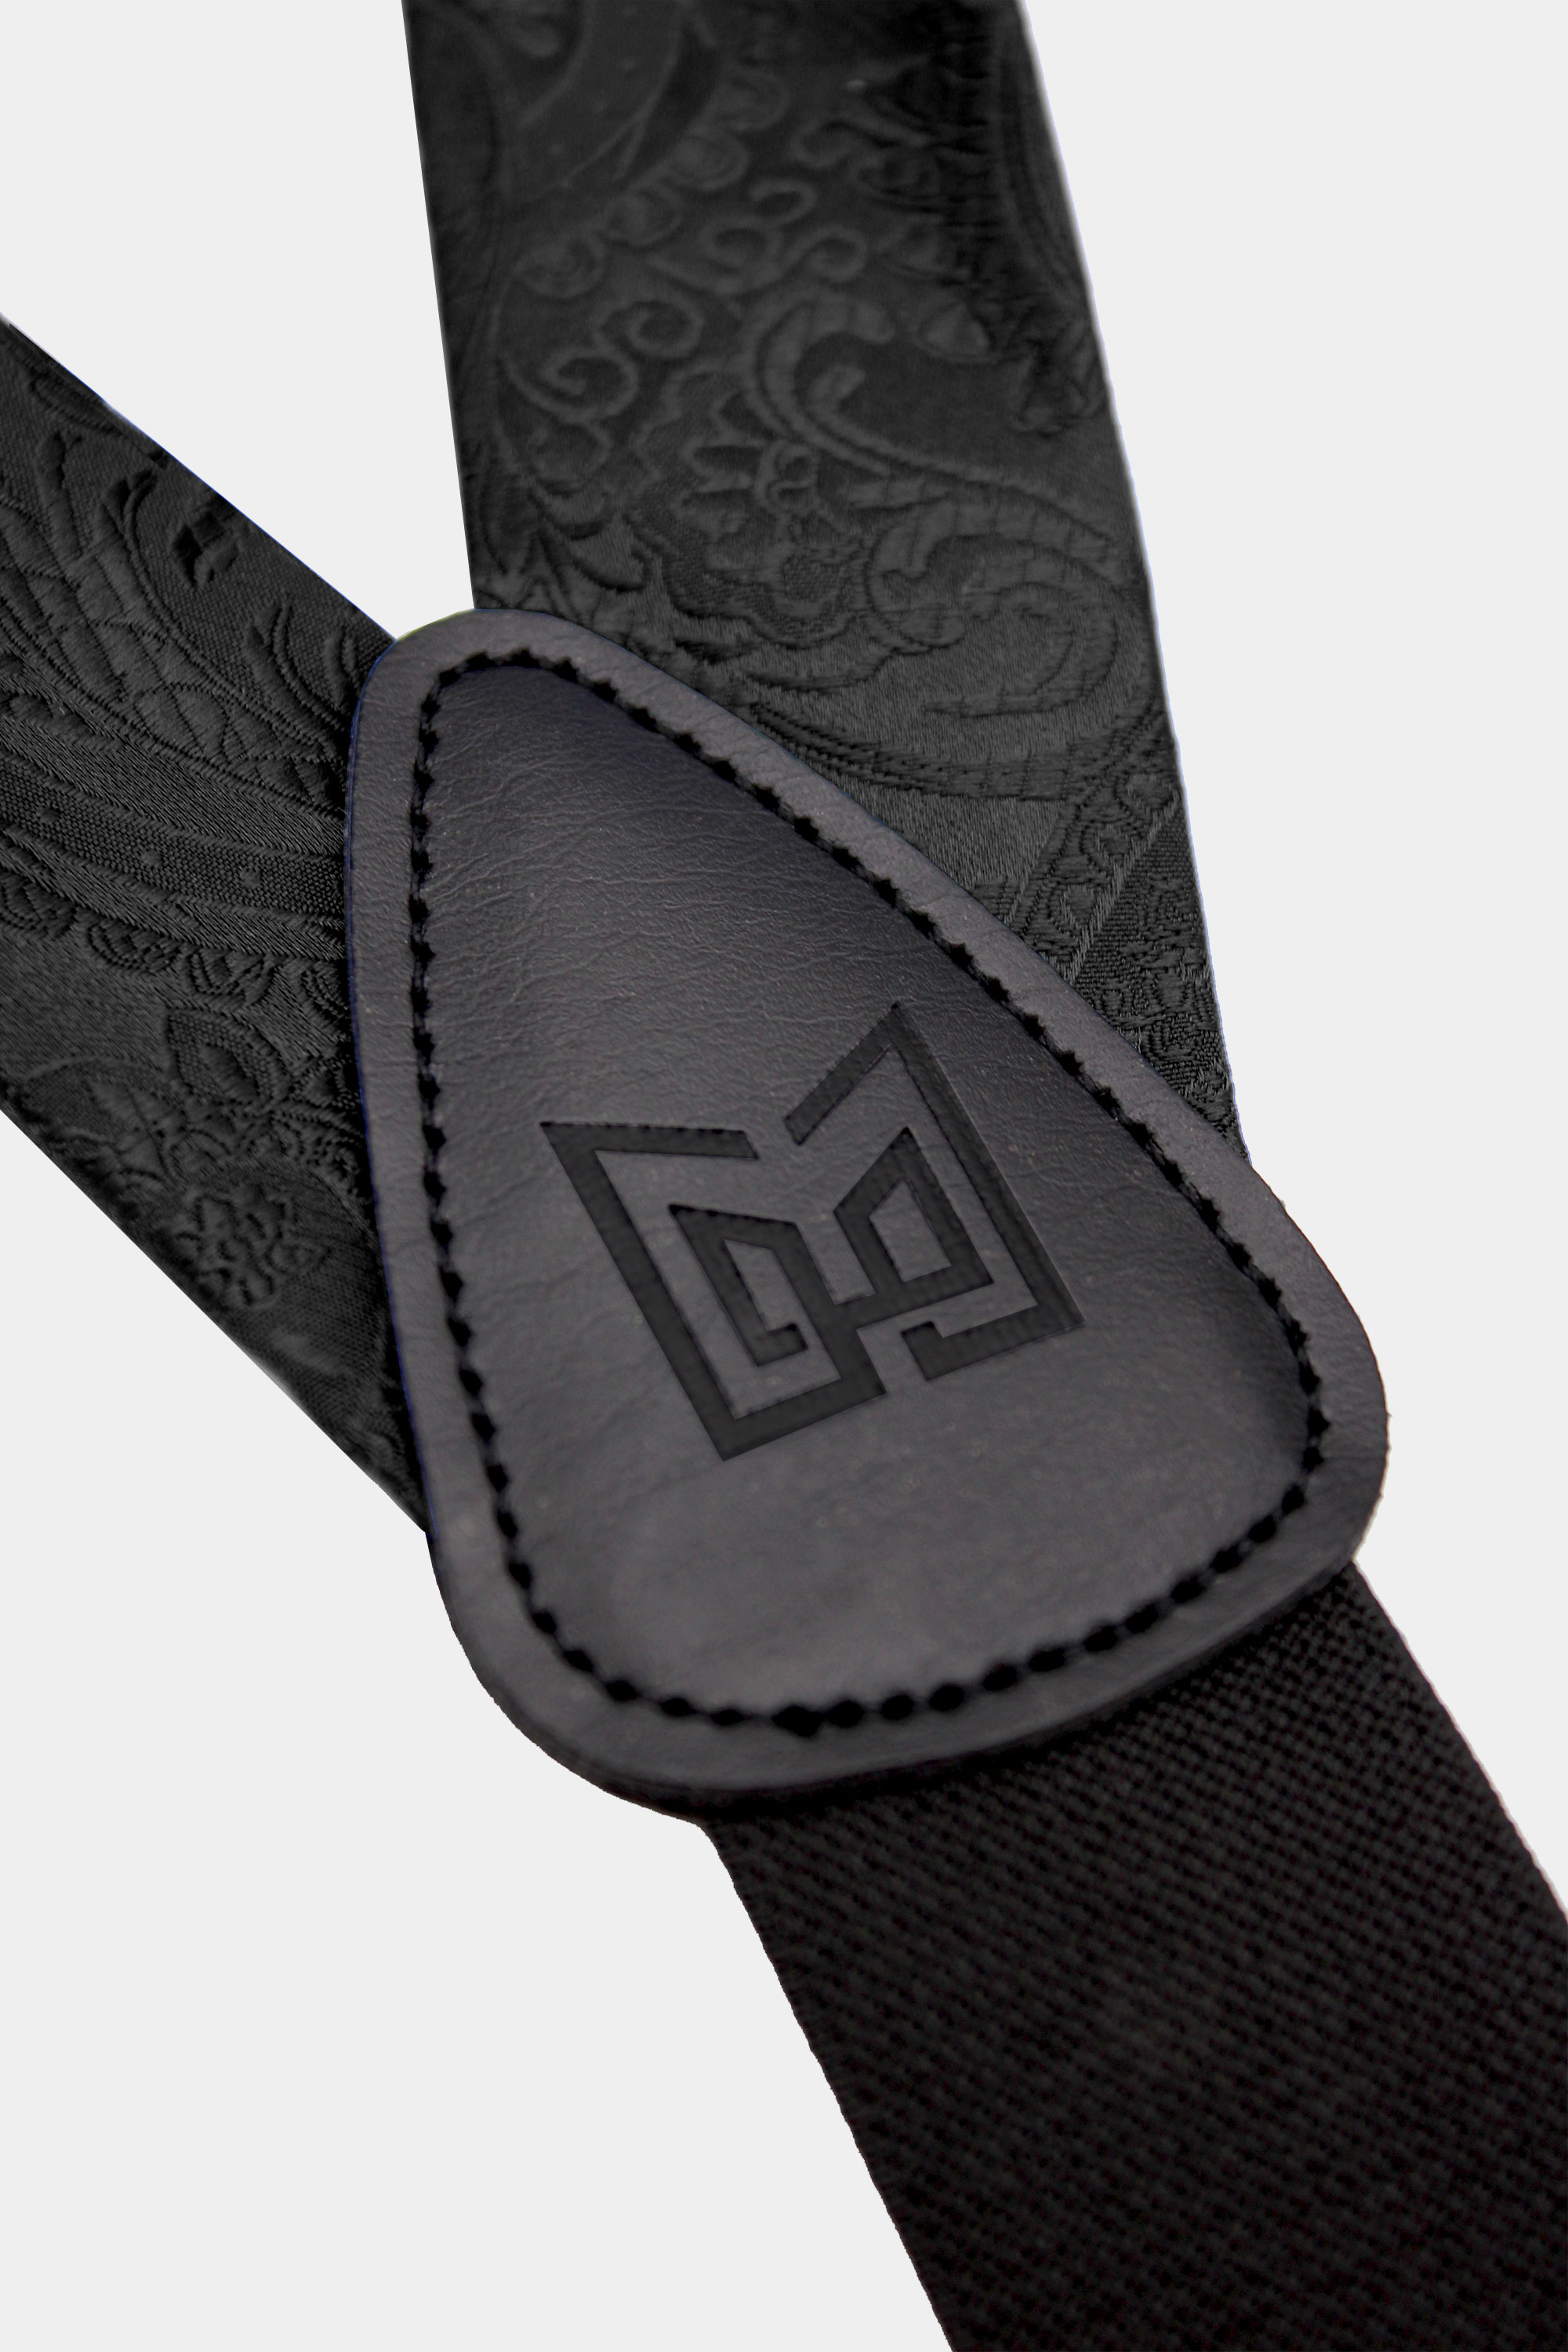 Paisley-Black-Suspenders-from-Gentlemansguru.com